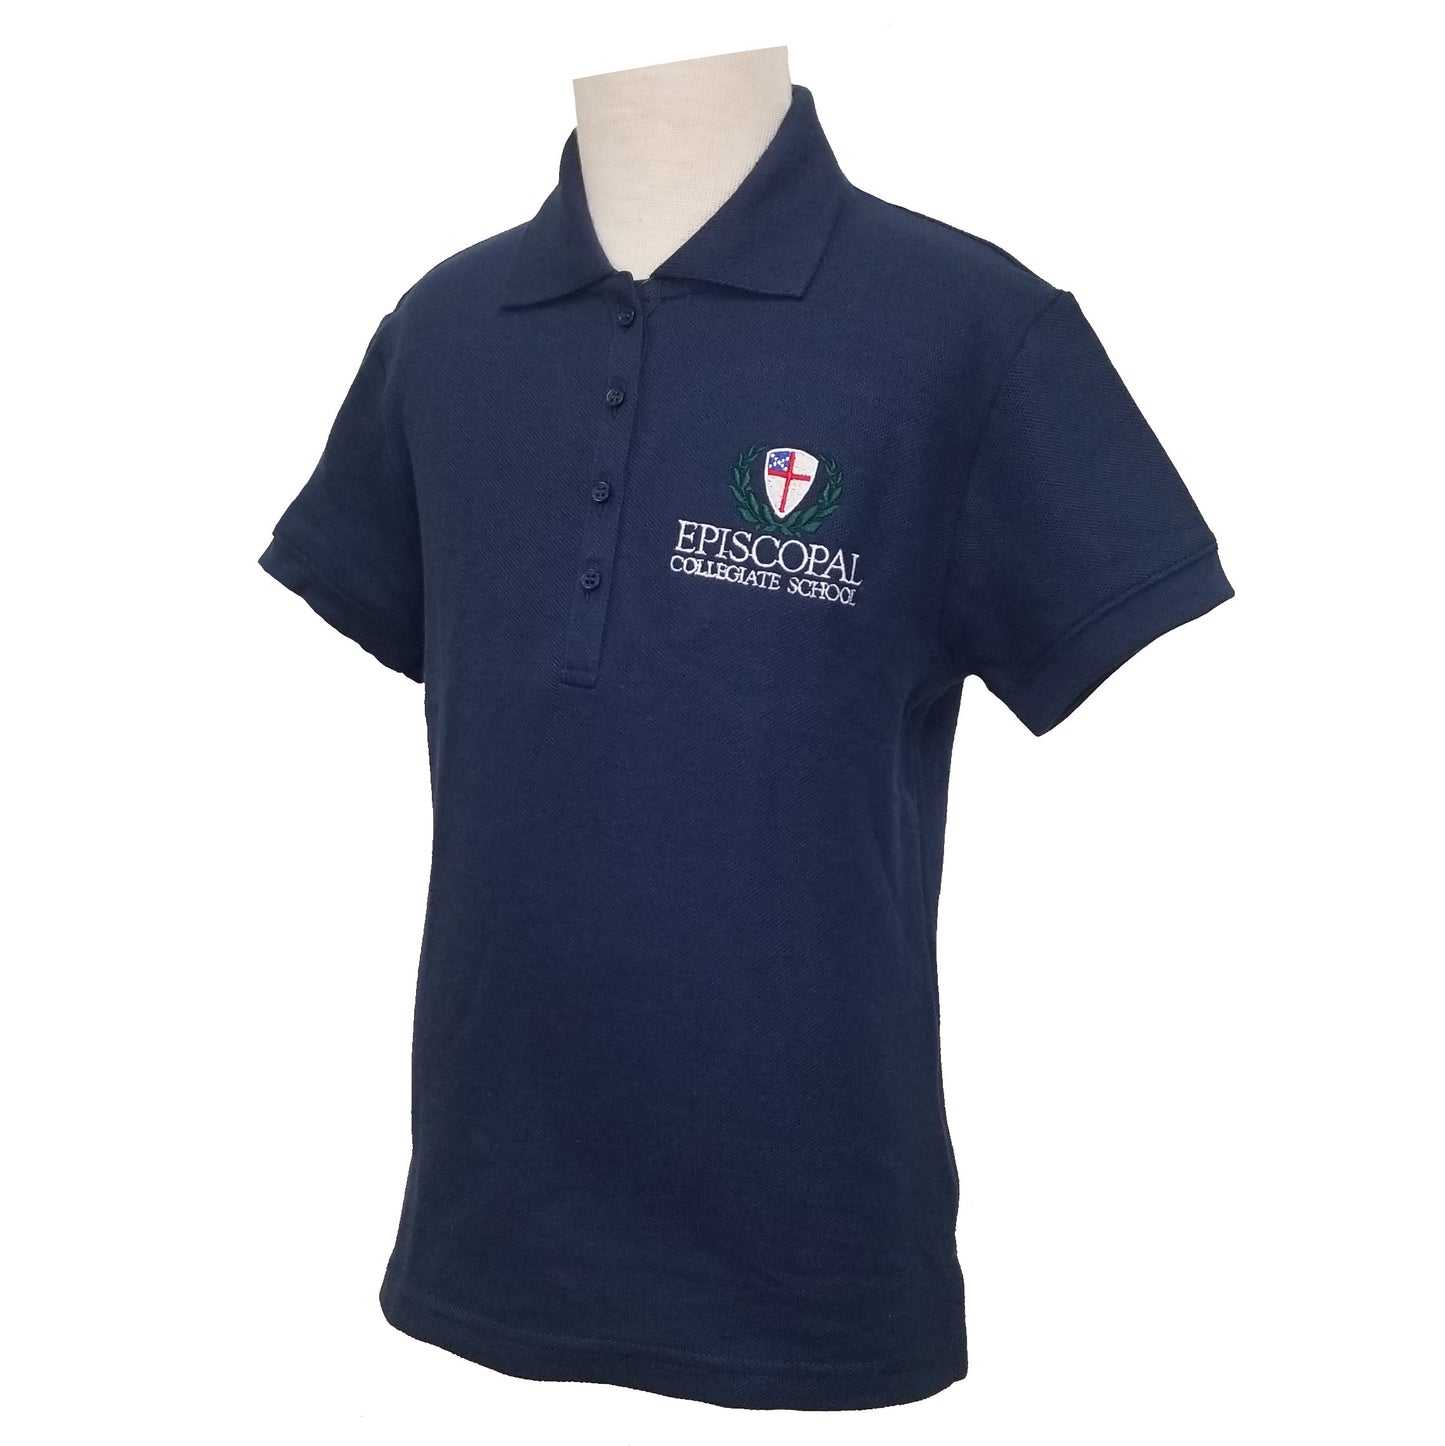 Adult Girl Cut Short Sleeve Polo With Episcopal Collegiate School Logo